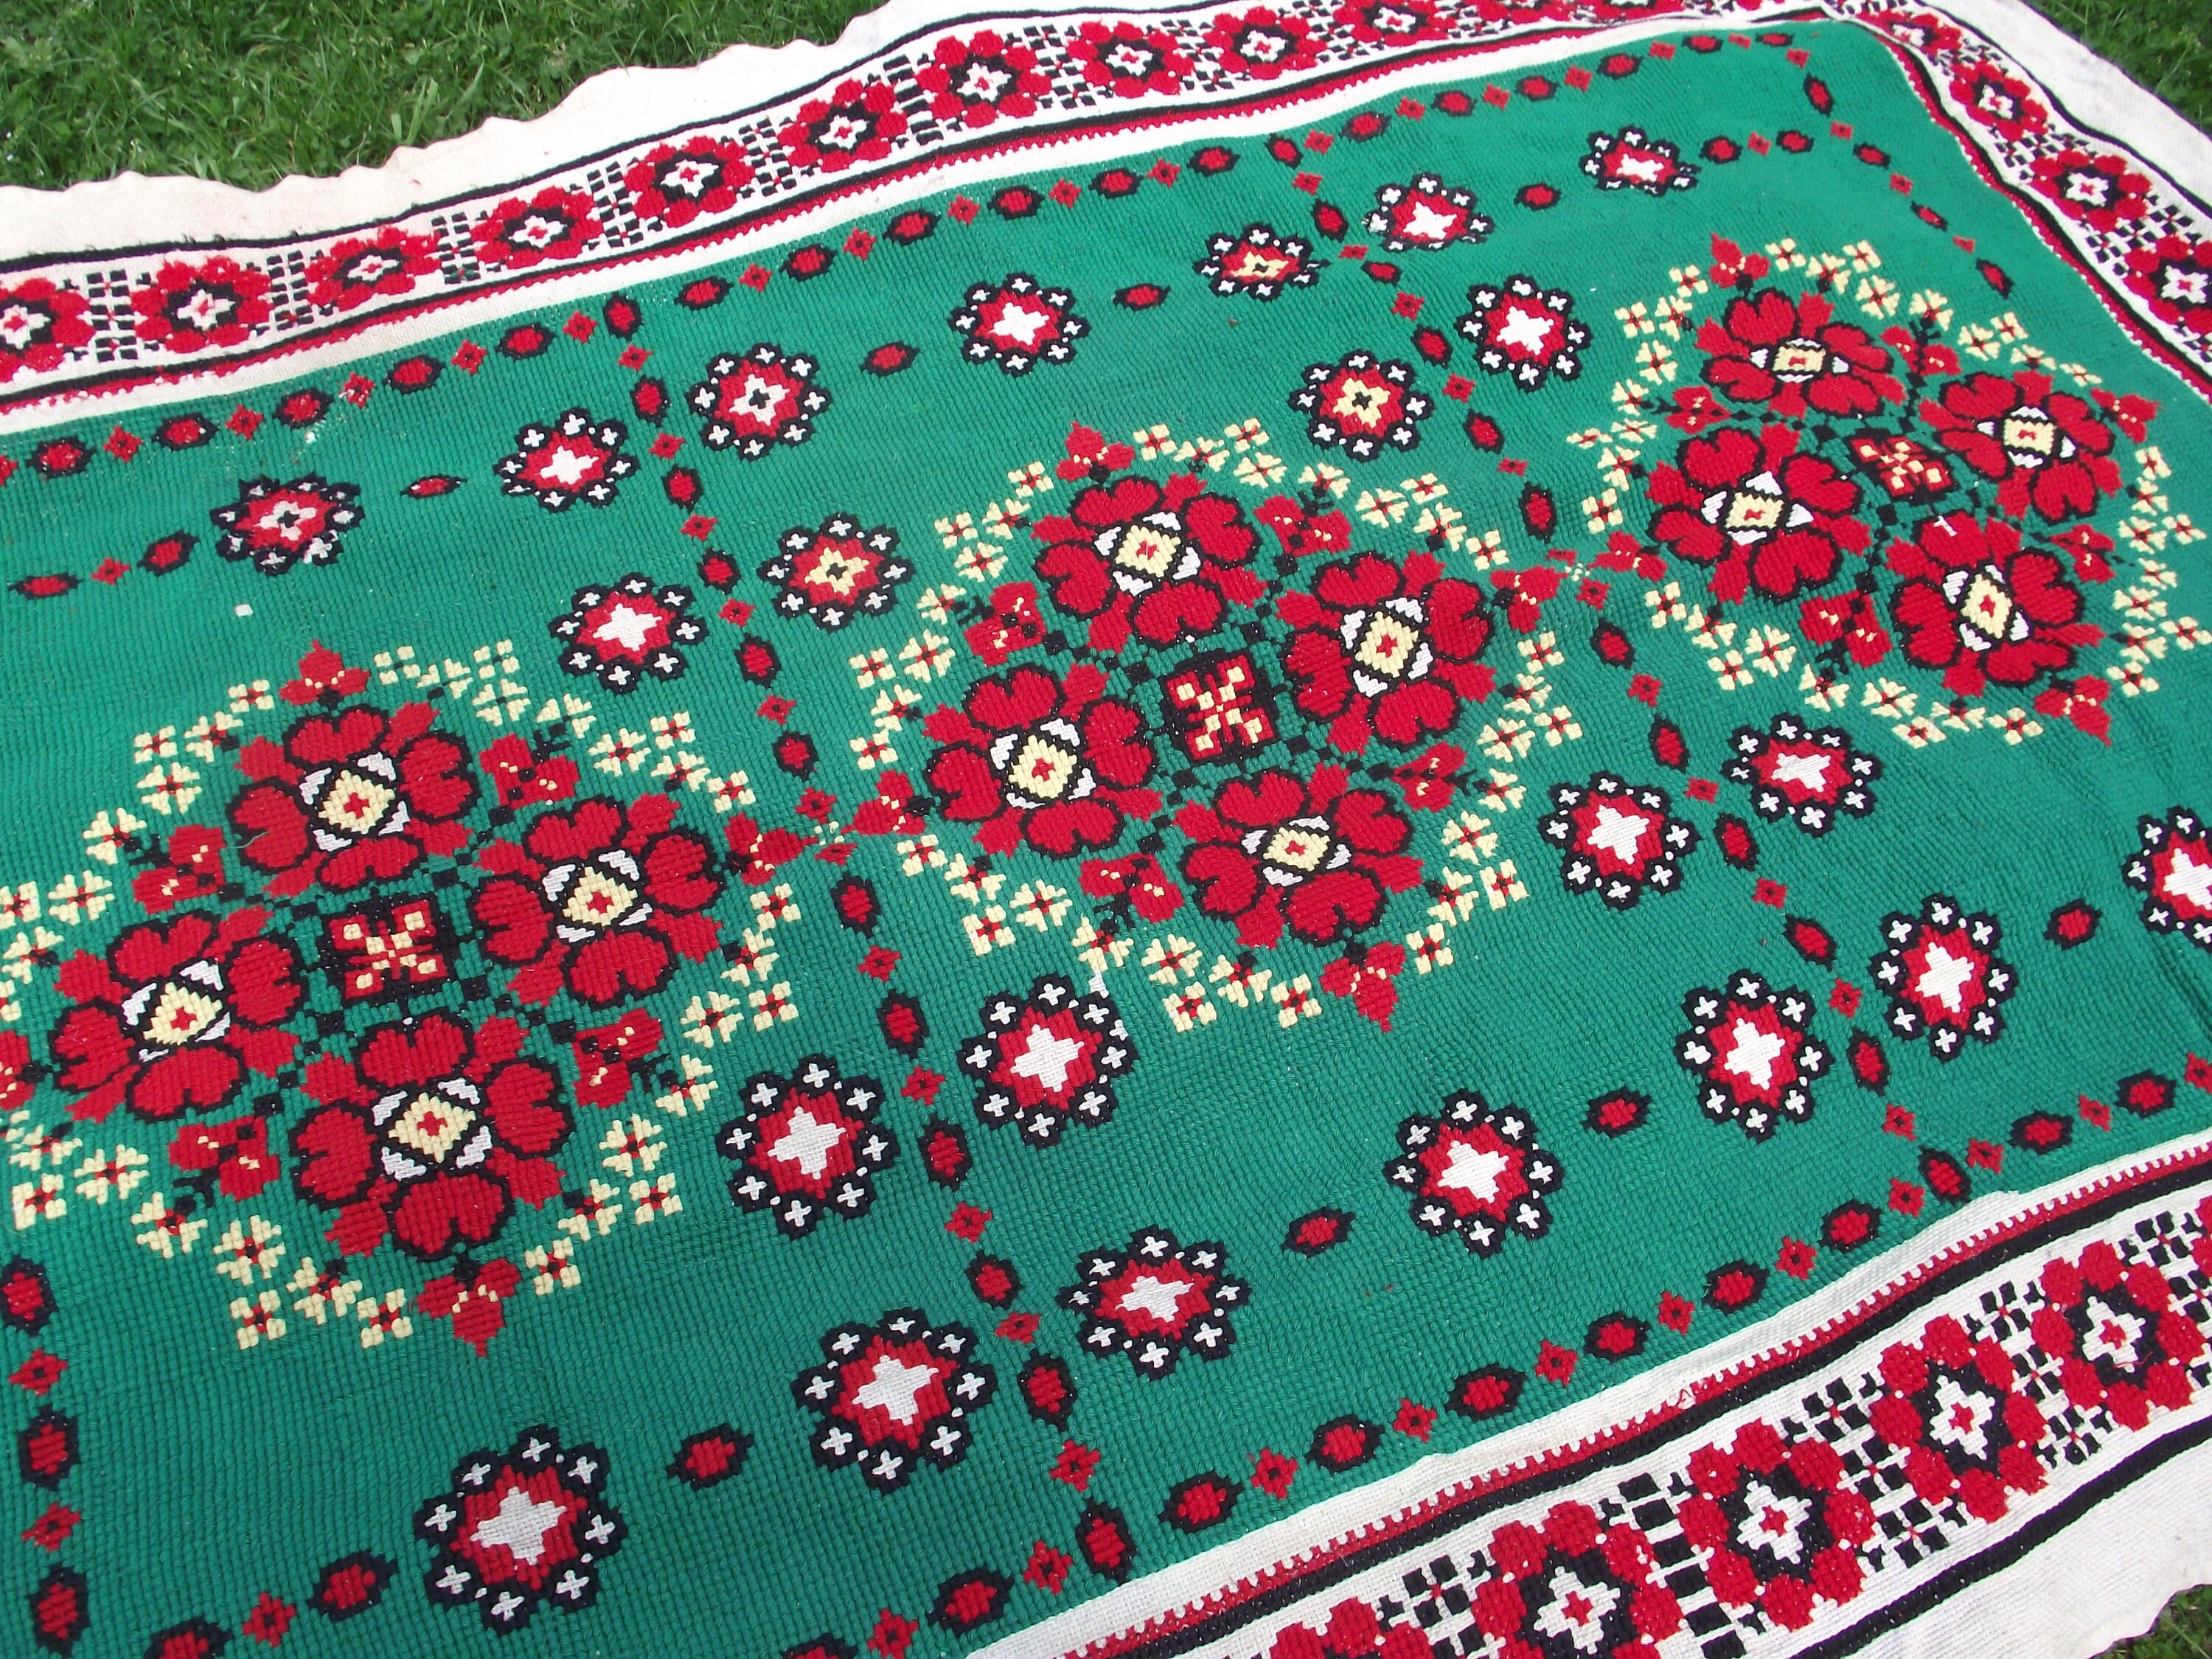 Wonderful Carpet Cross-stitch Old Antique Rug Kilim Embroidery